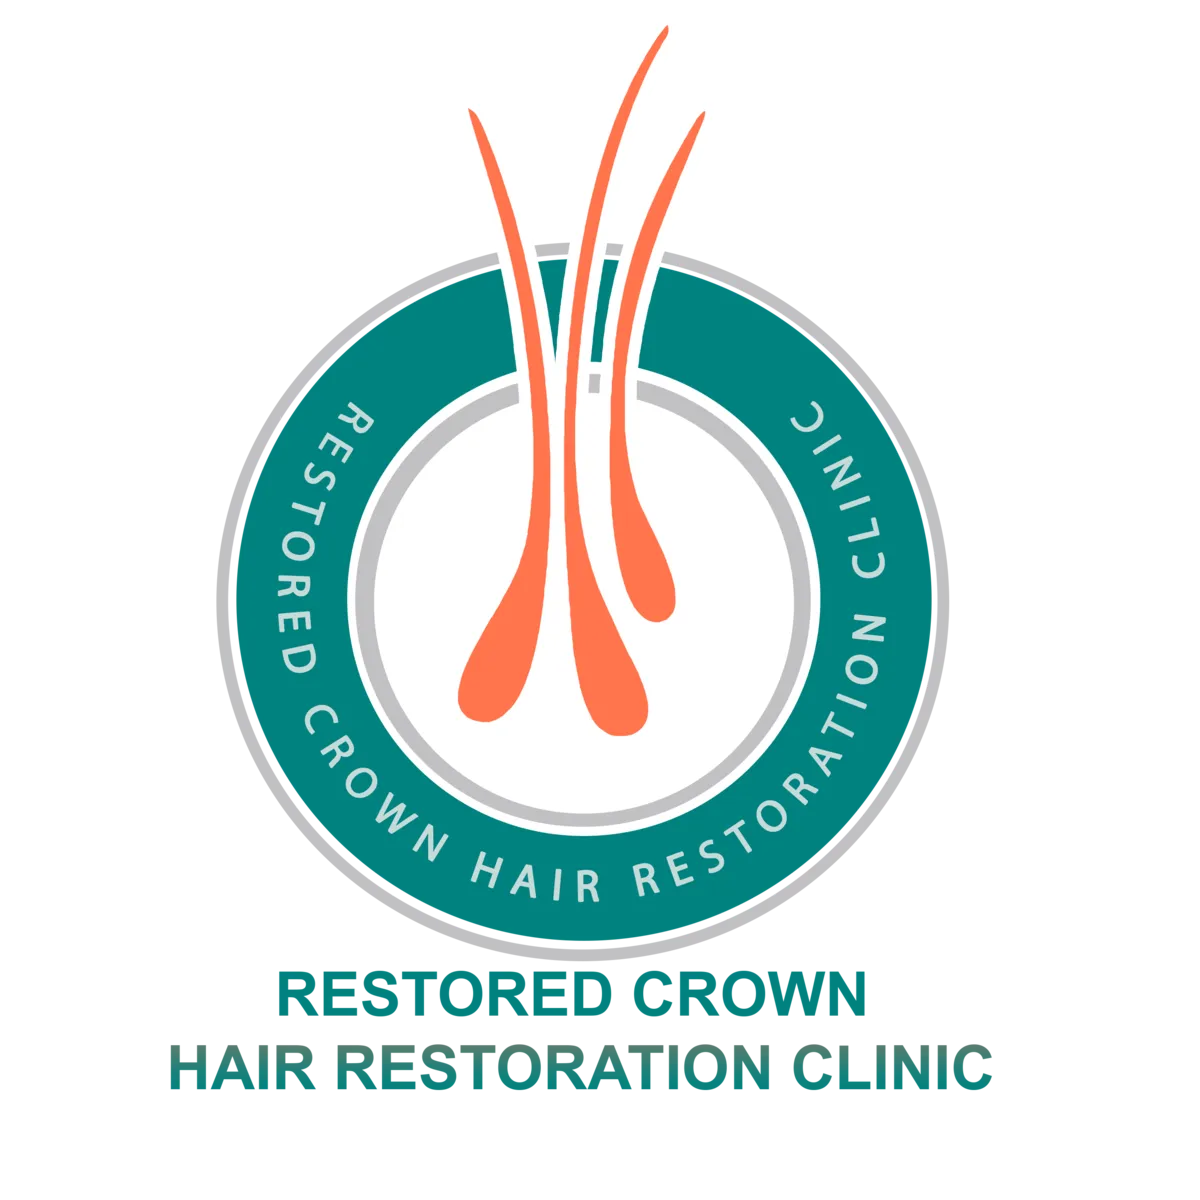 Restored Crown Hair Restoration Clinic